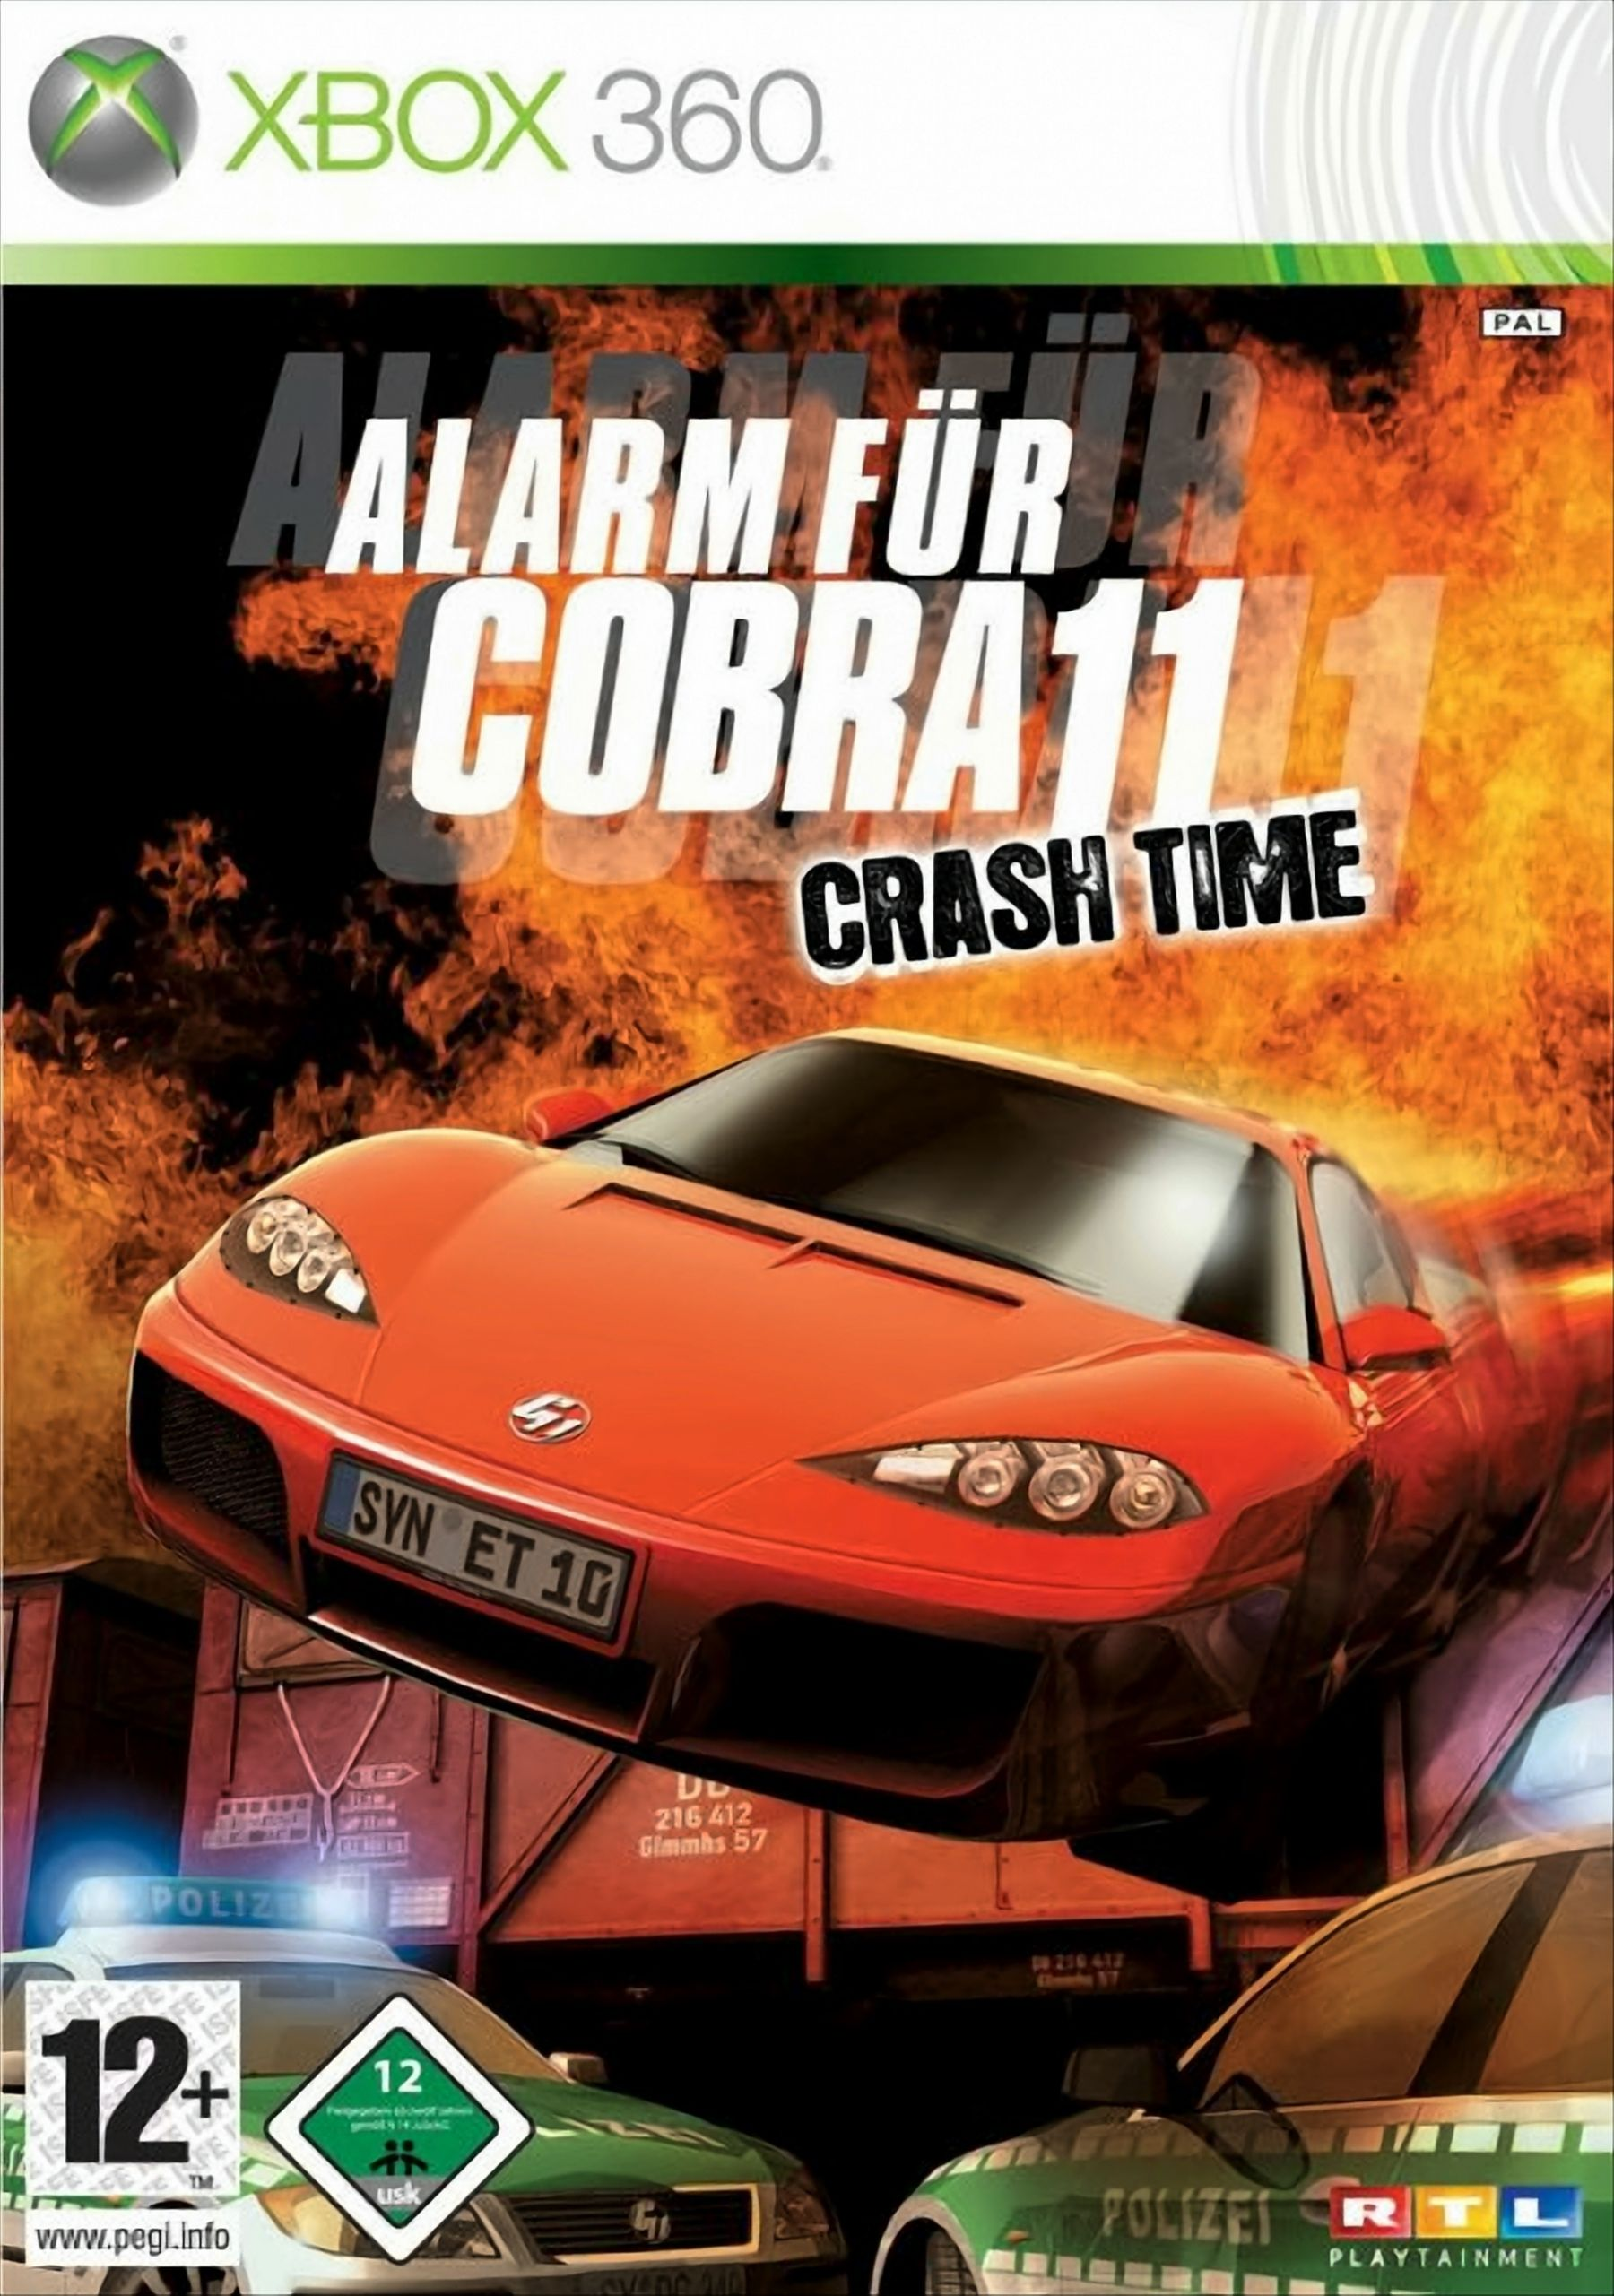 Time 360] Alarm - 11: für Cobra Crash [Xbox